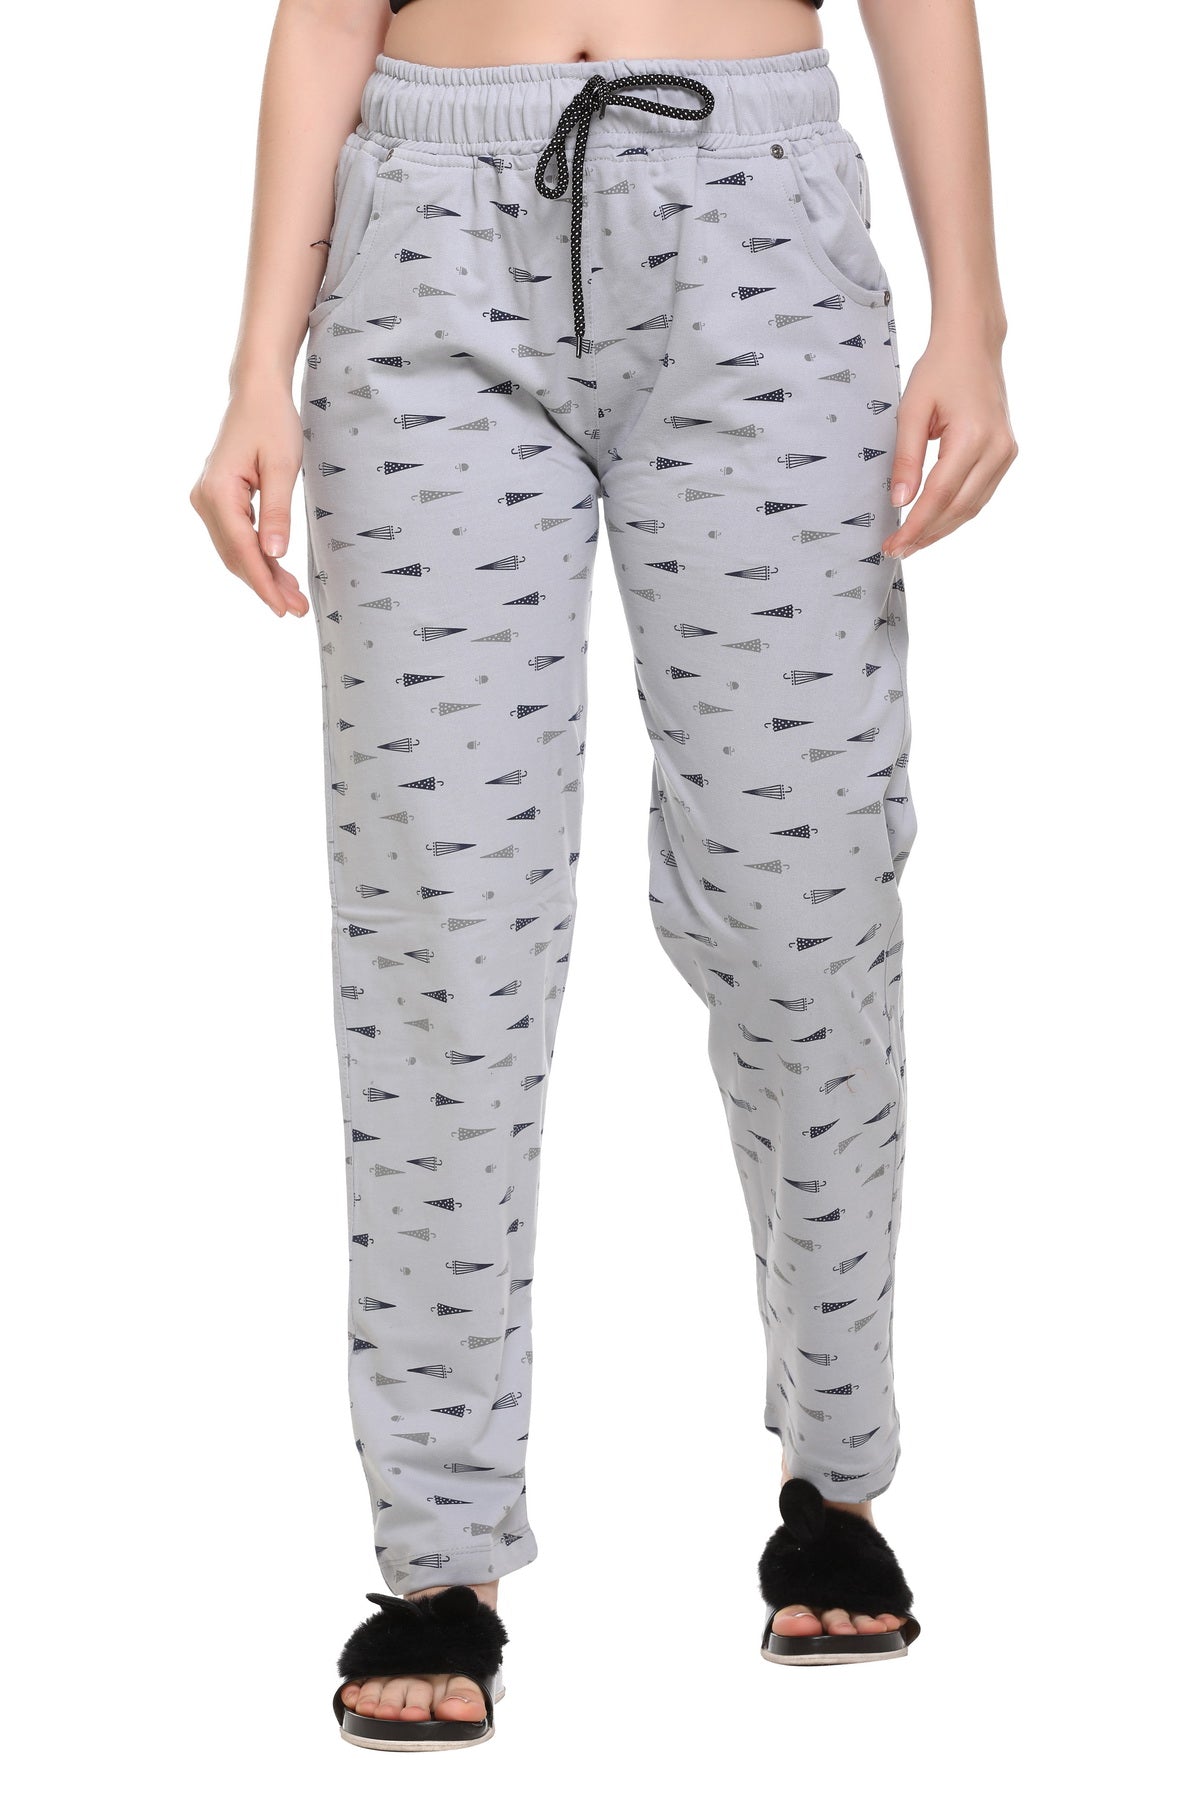 Cotton Printed Pajamas For Women - Pastel Grey